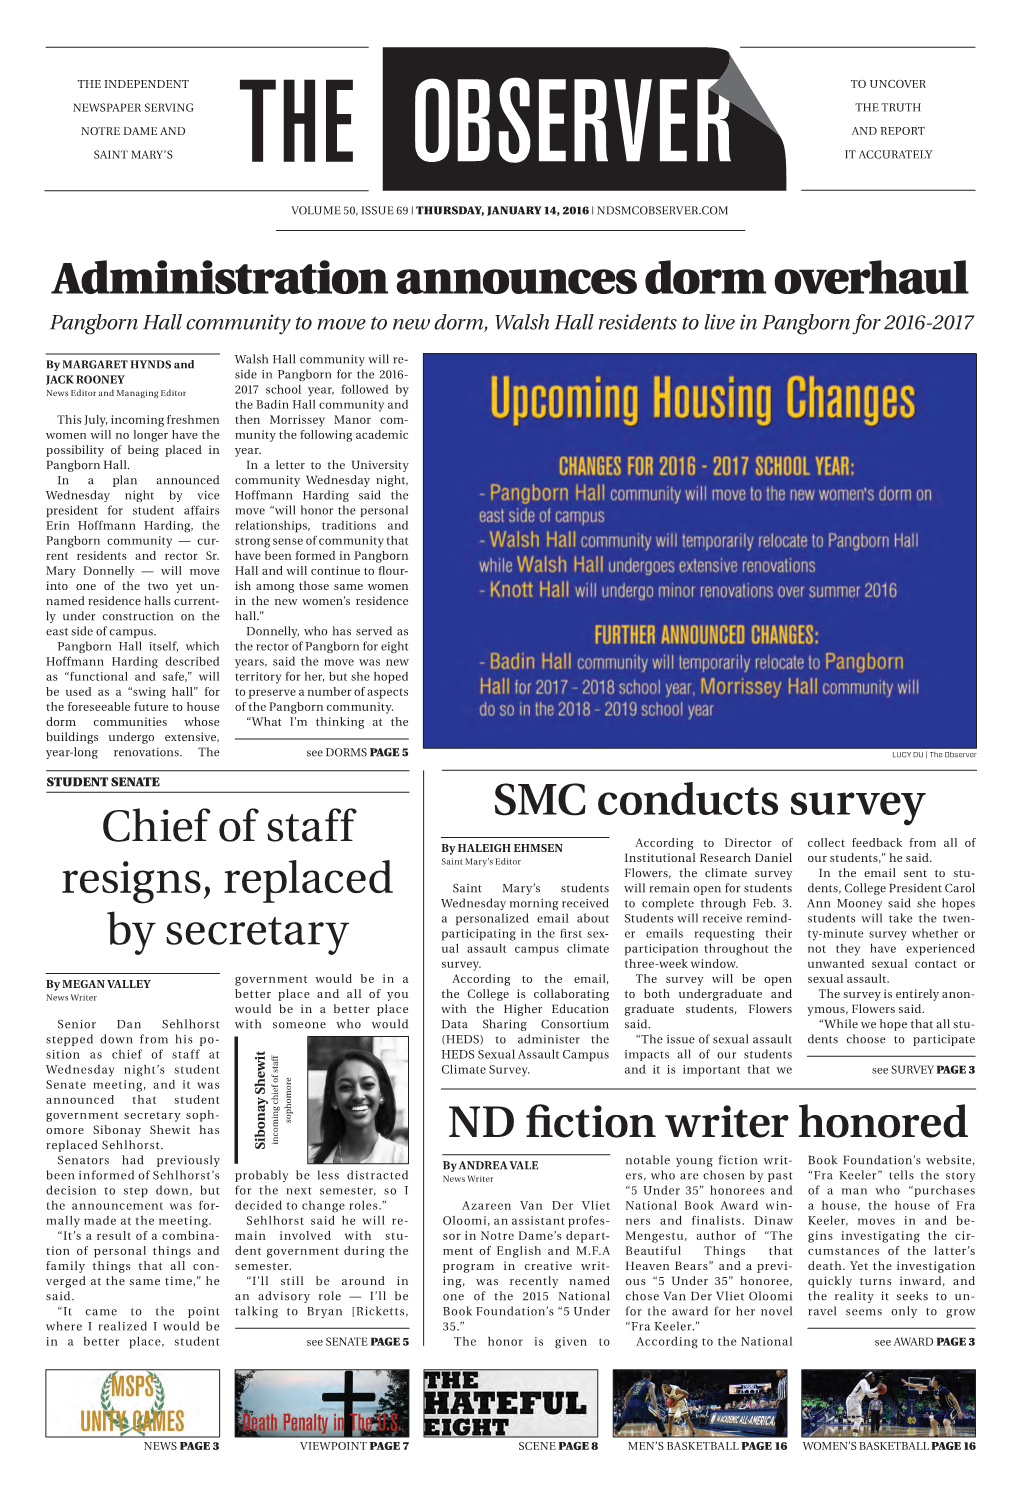 Administration Announces Dorm Overhaul Chief of Staff Resigns